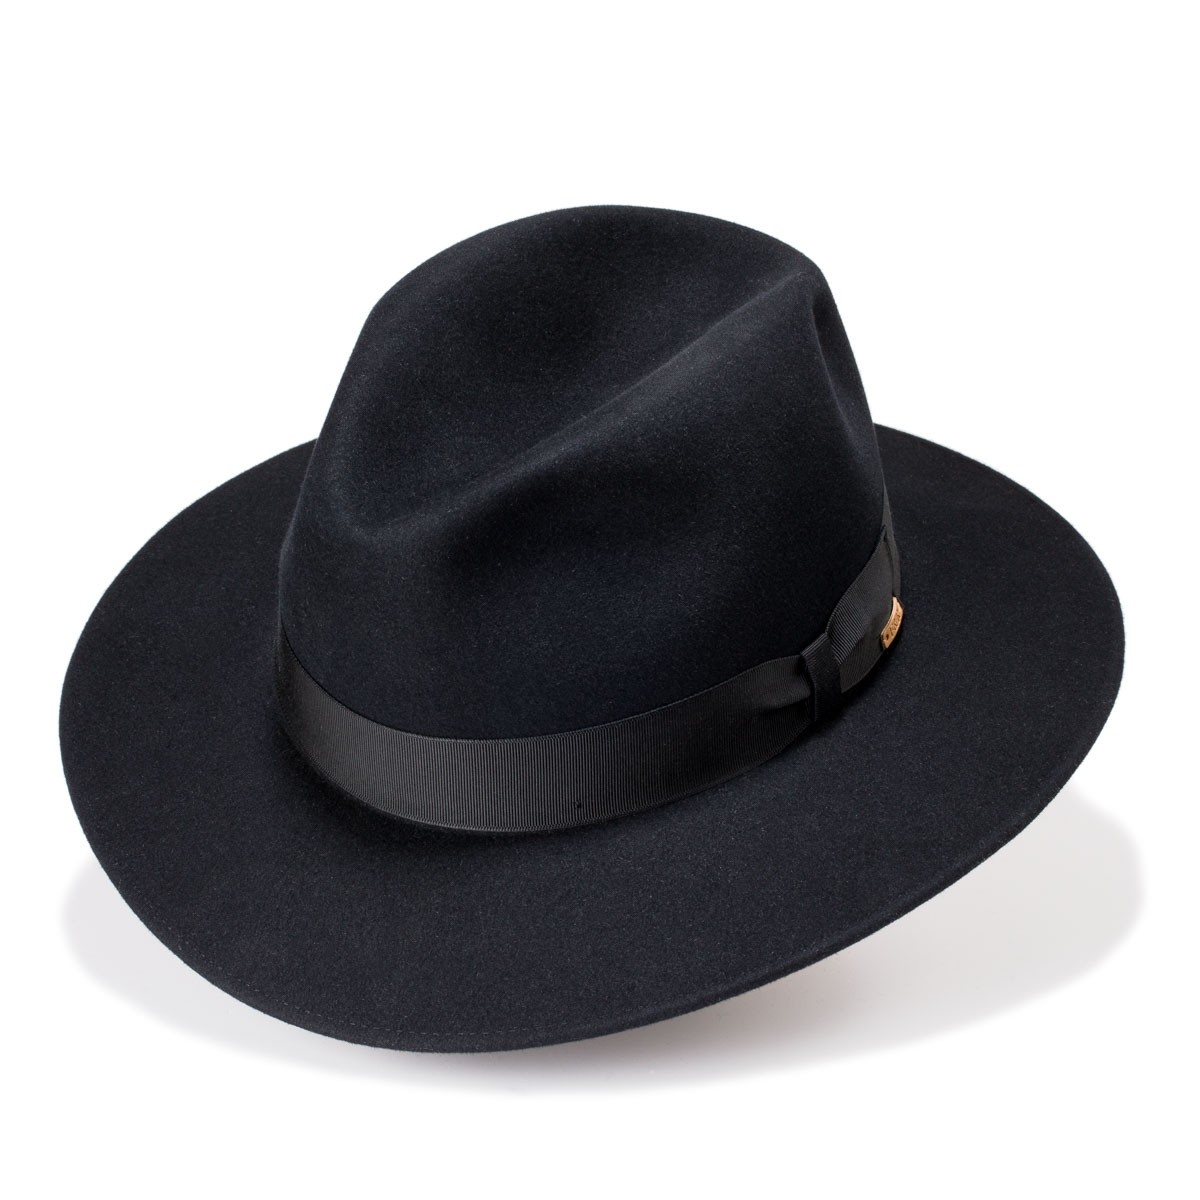 Albi black hat felt hat with hair Crown style. Handmade in Spain. Fernandez y Roche